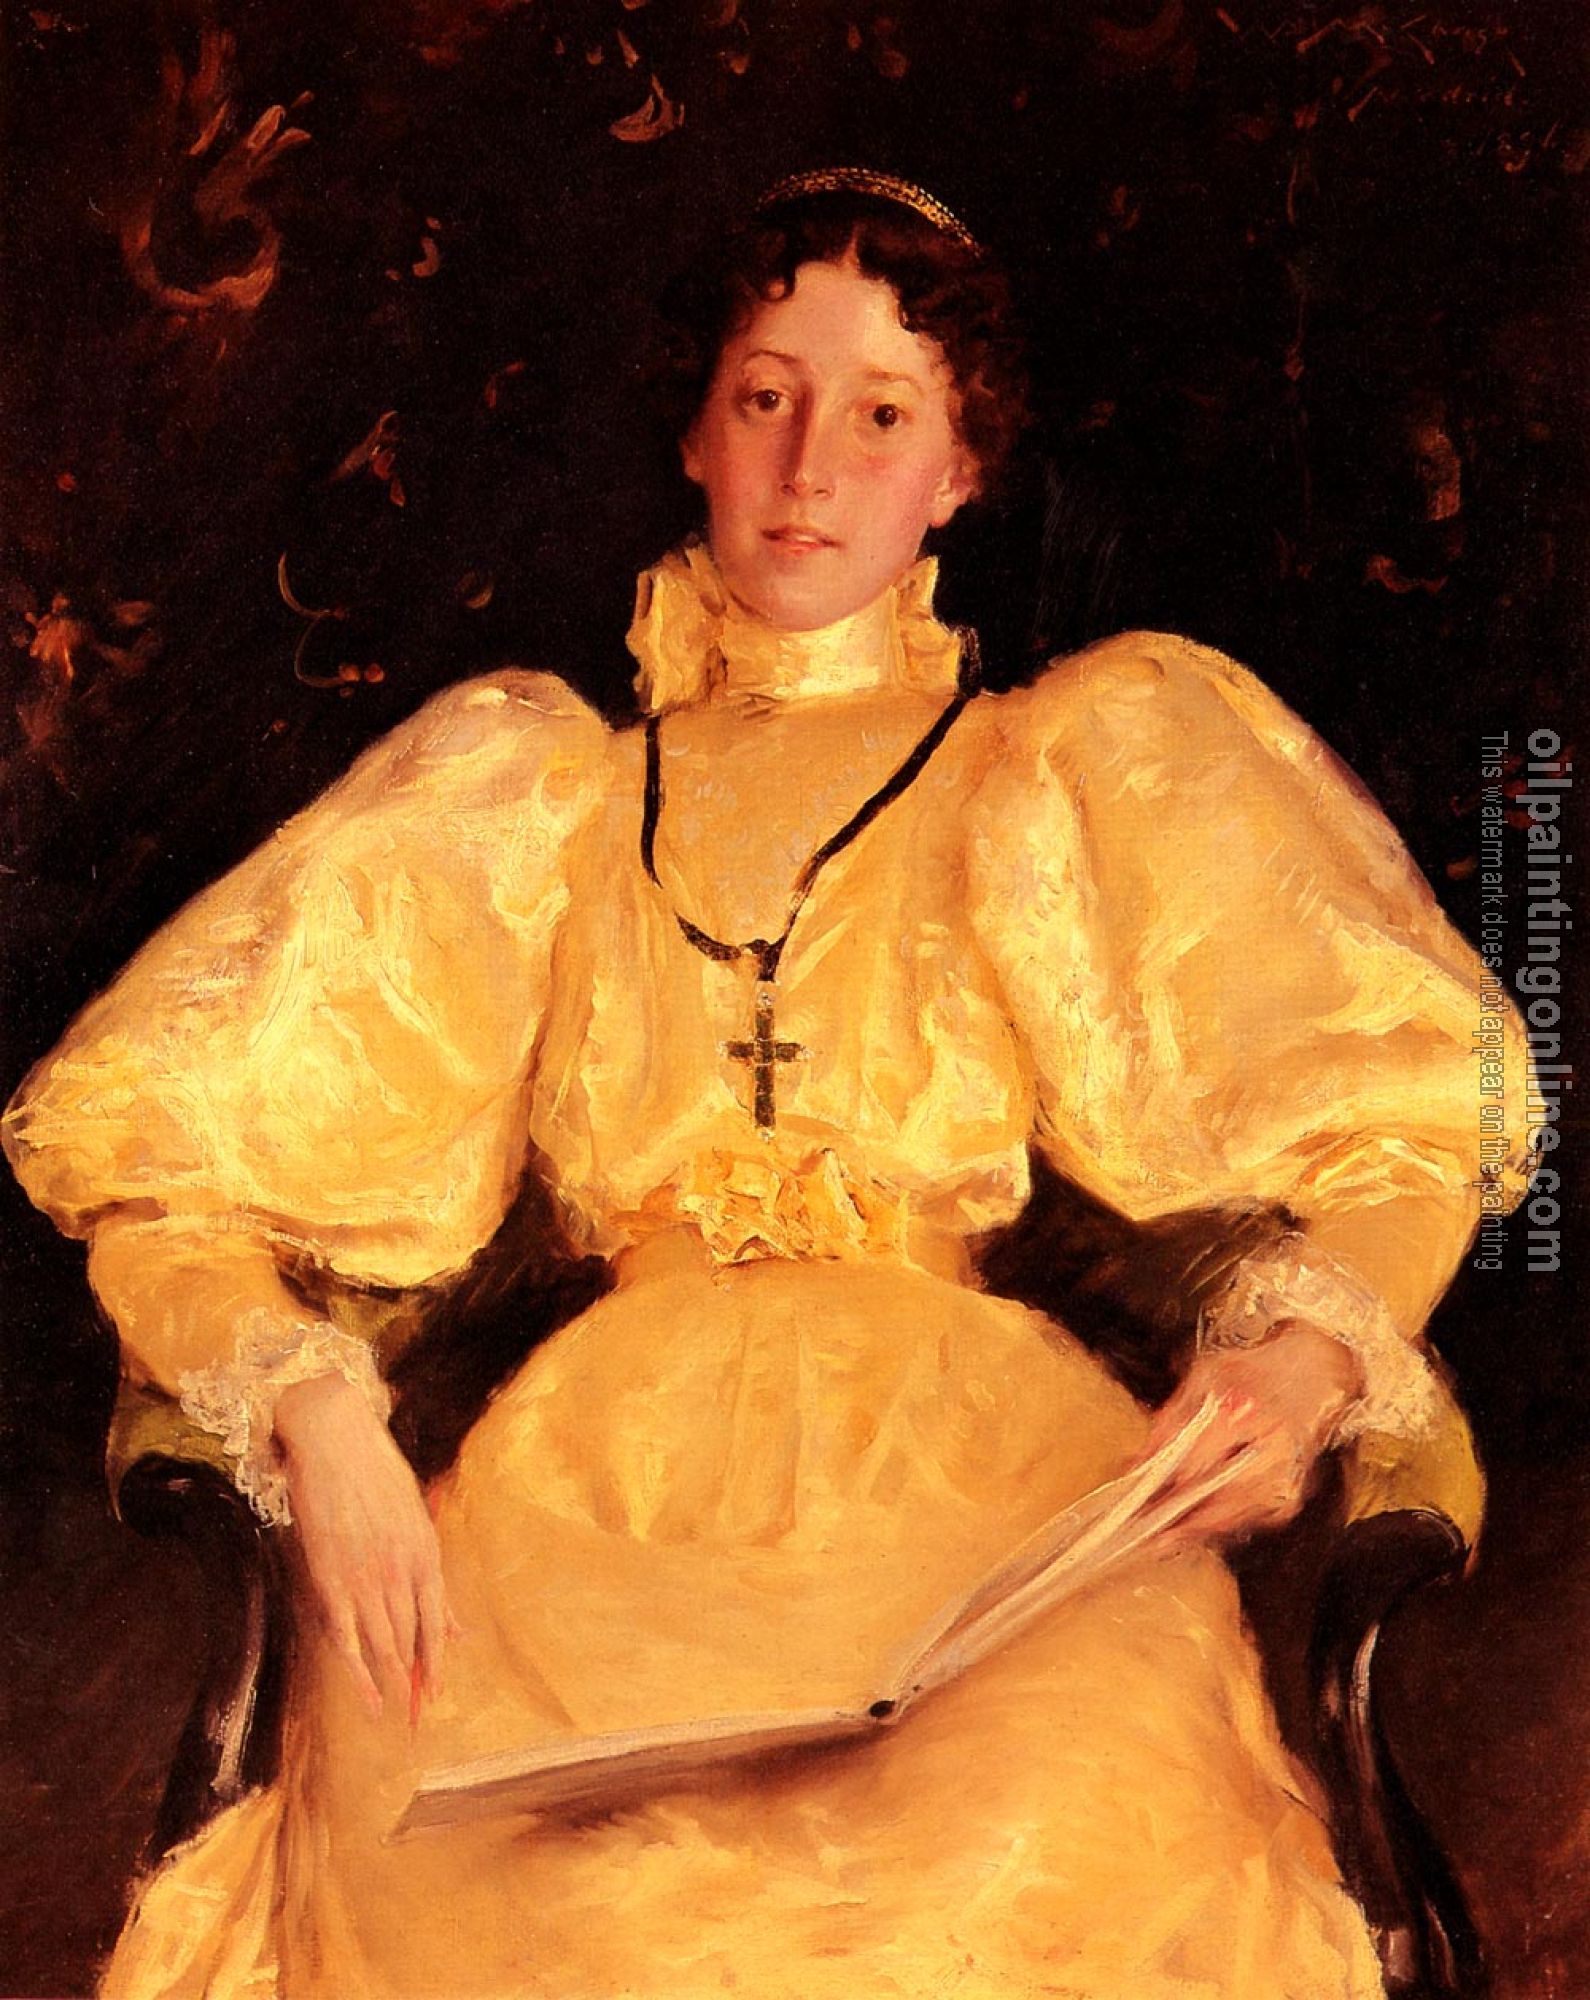 Chase, William Merritt - The Golden Lady